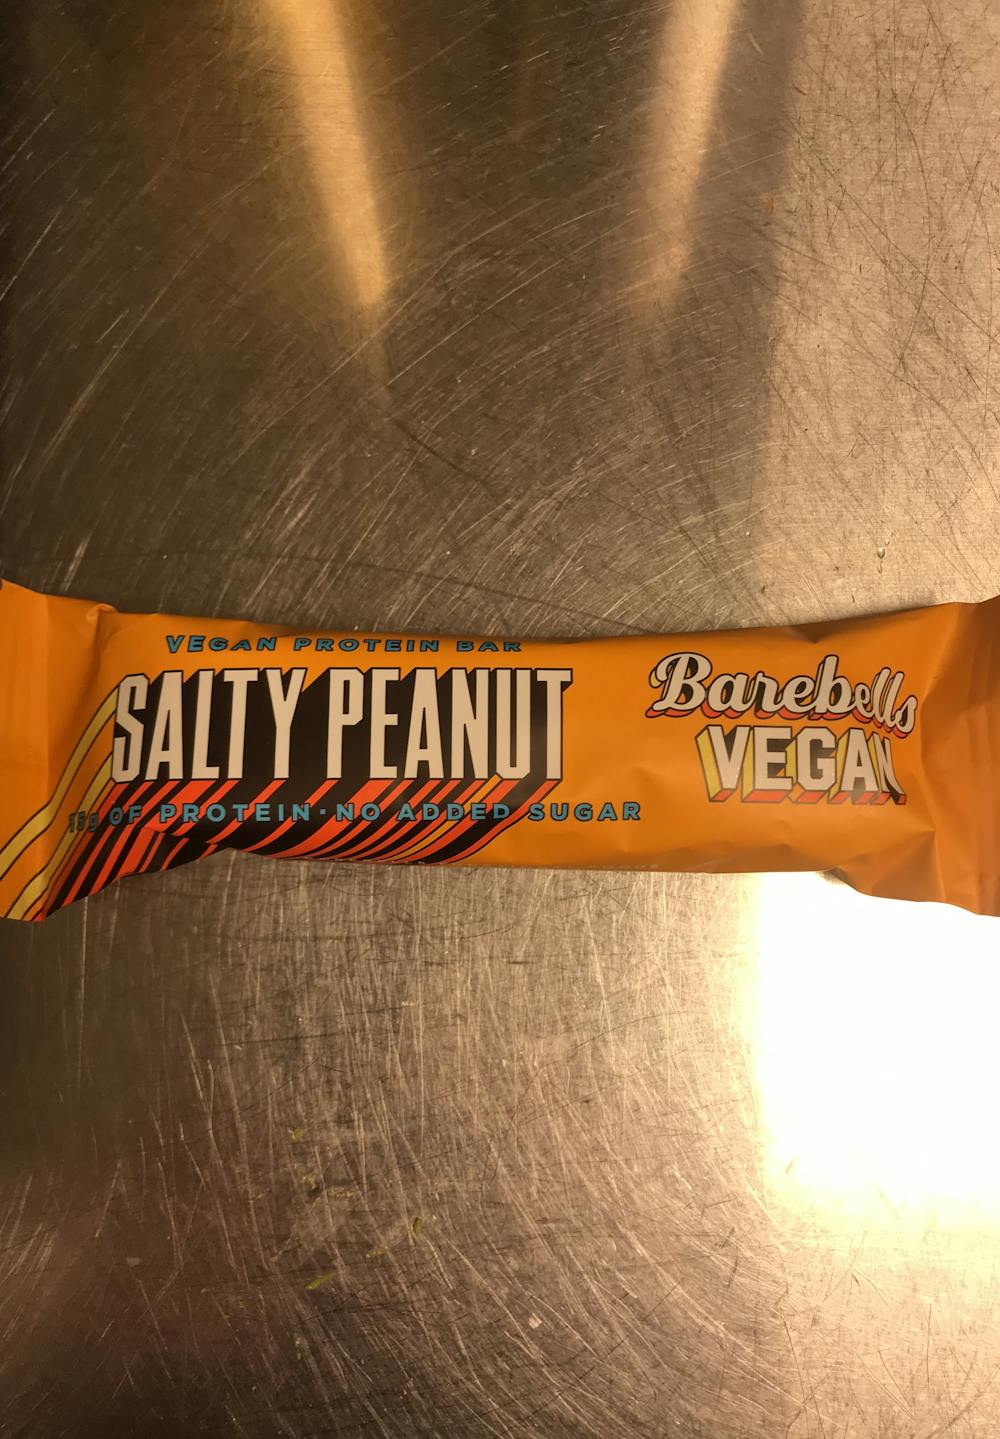 Salty peanut, Barebells